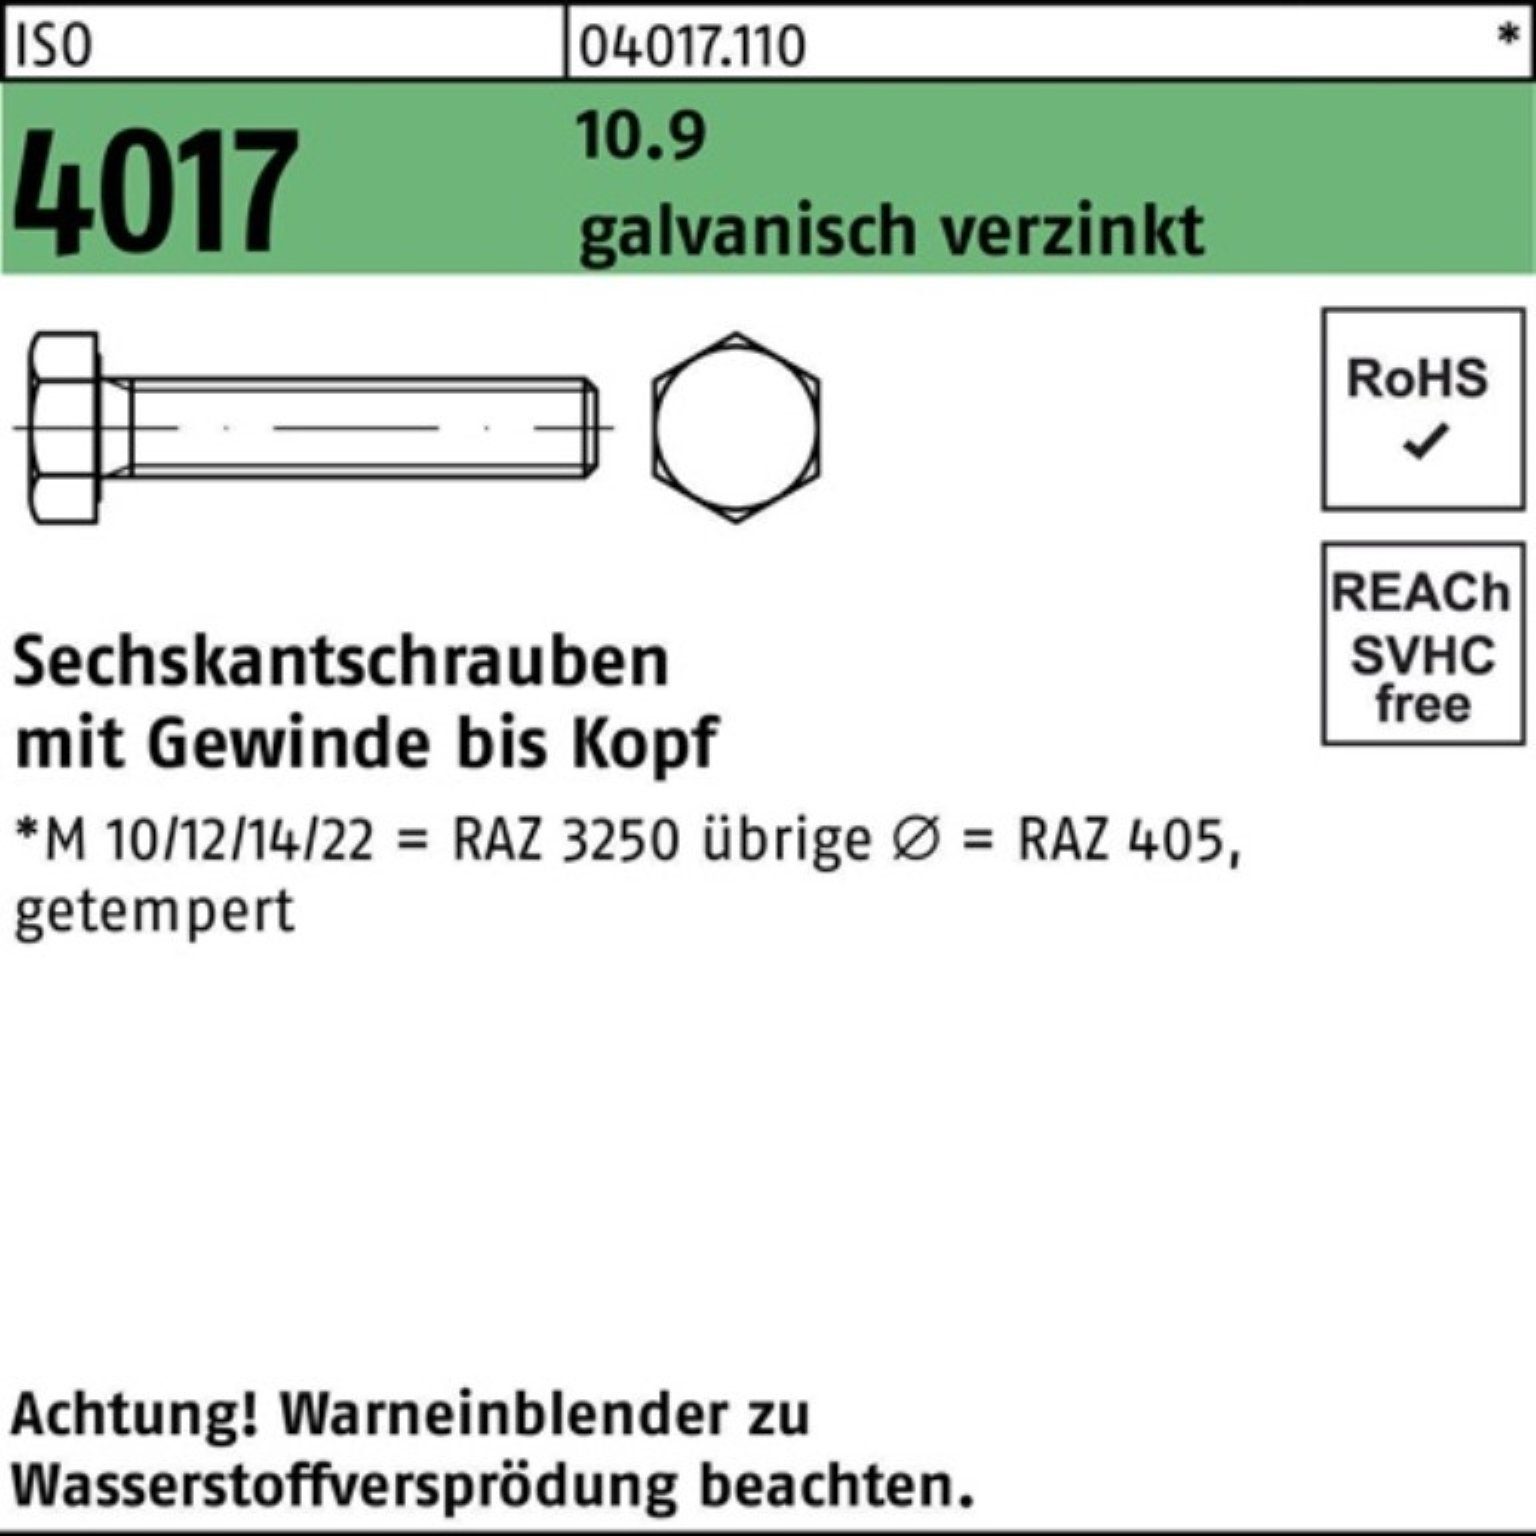 Bufab Sechskantschraube 100er Pack Sechskantschraube 190 25 4017 galv.verz. ISO VG S 10.9 M20x